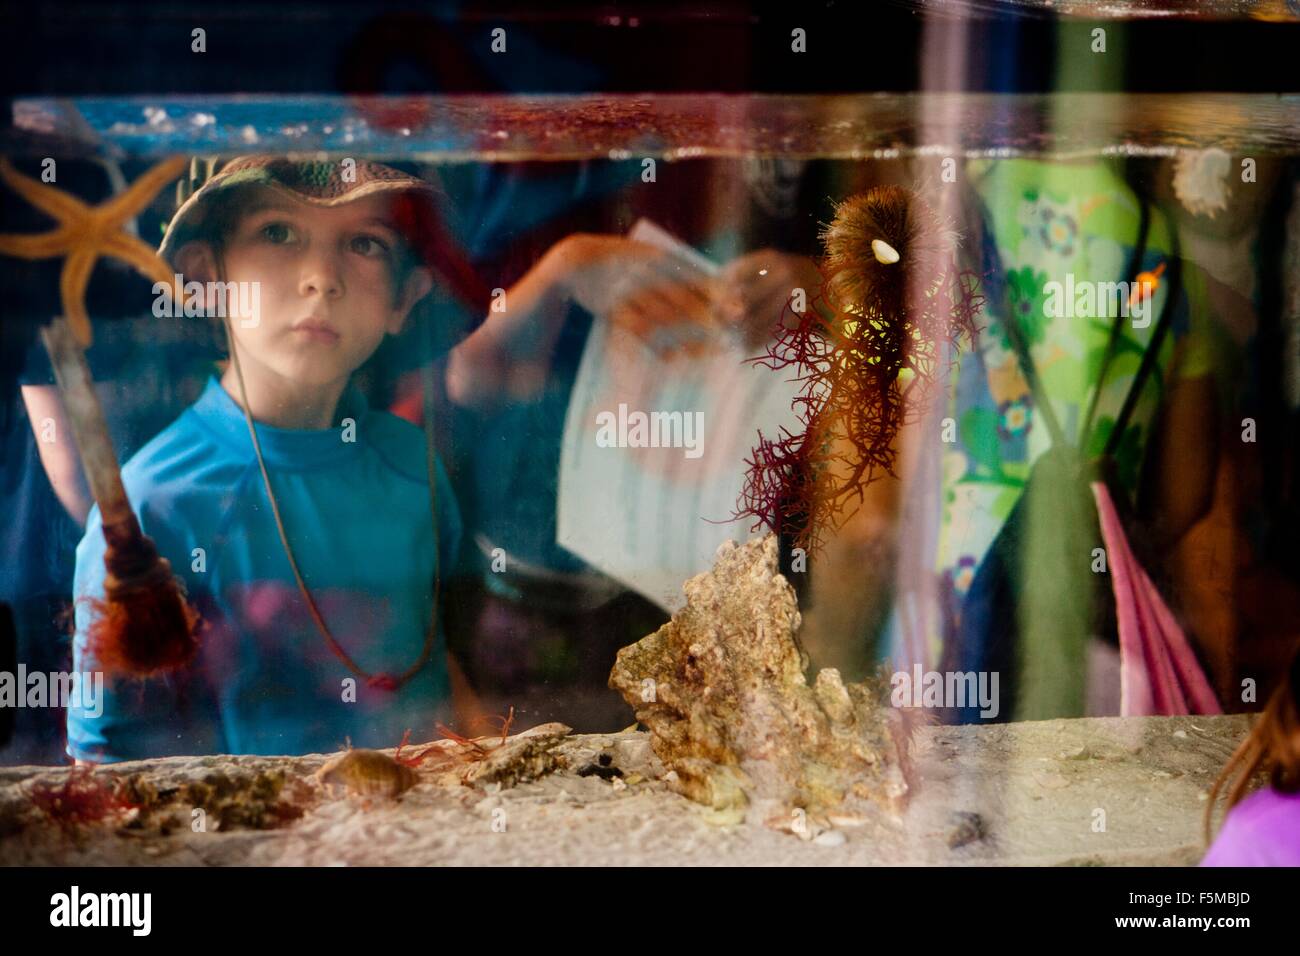 View through salt water aquarium of young boy looking at starfish Stock Photo